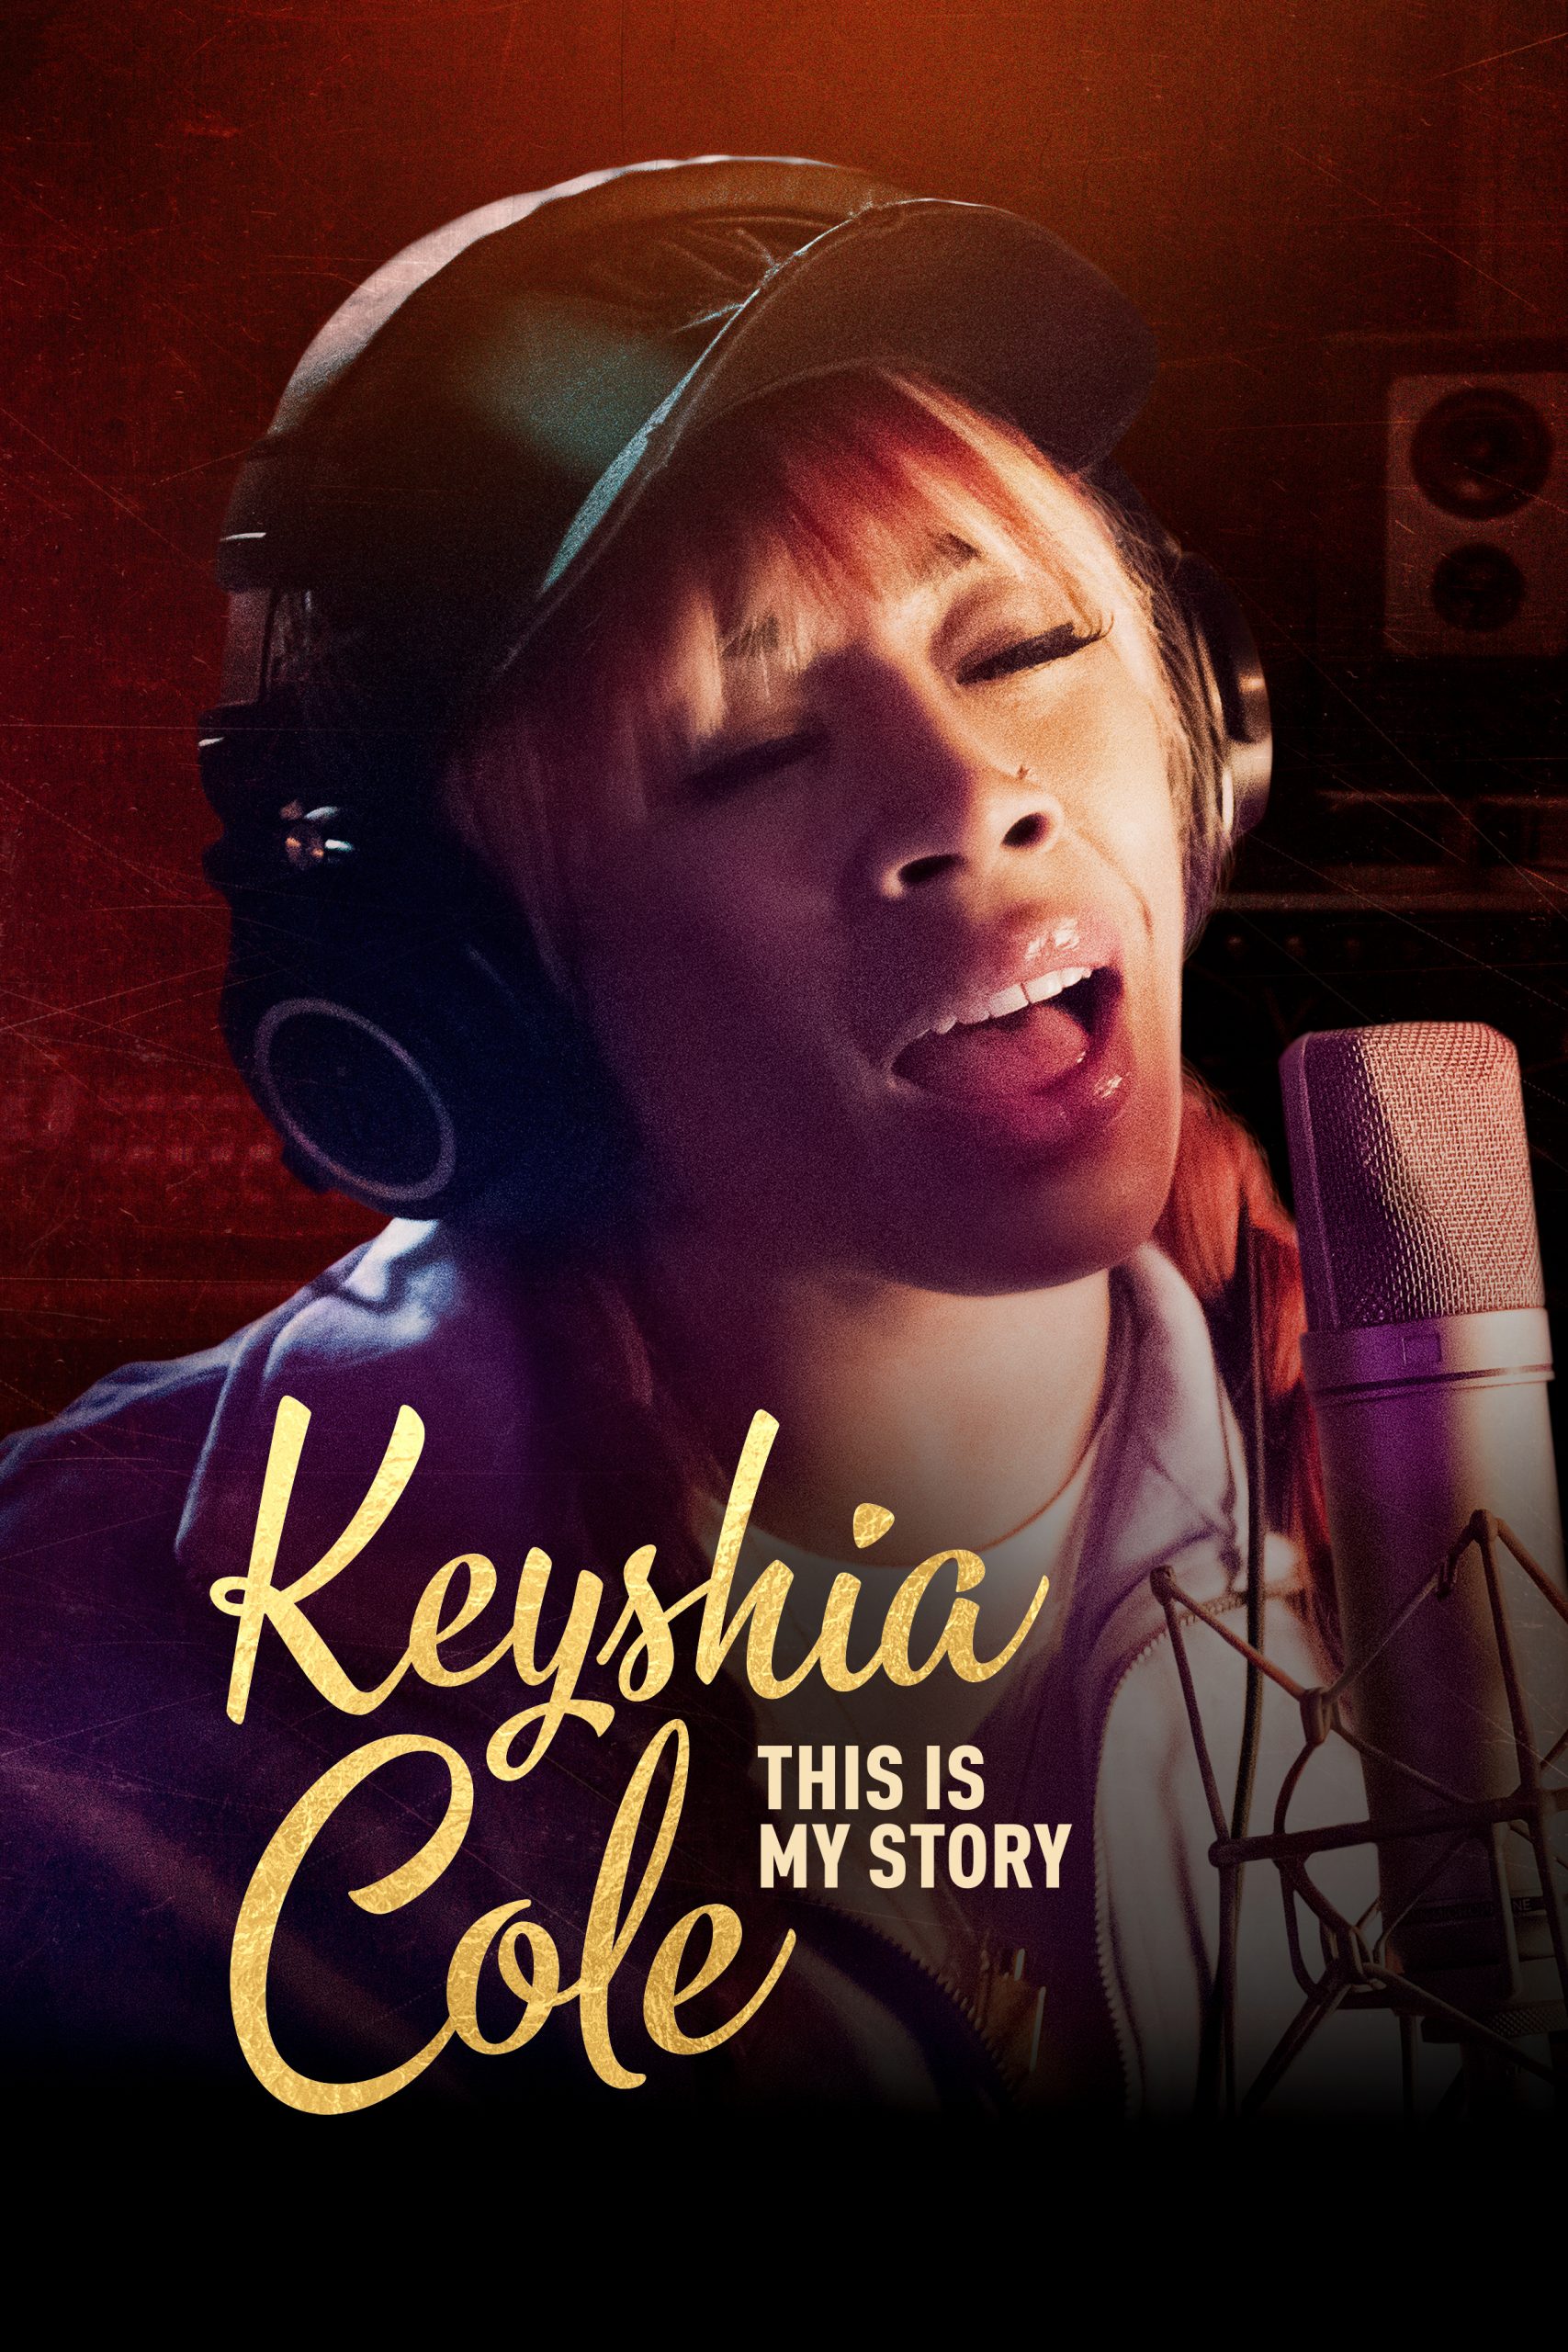 Keyshia-Cole-This-Is-My-Story